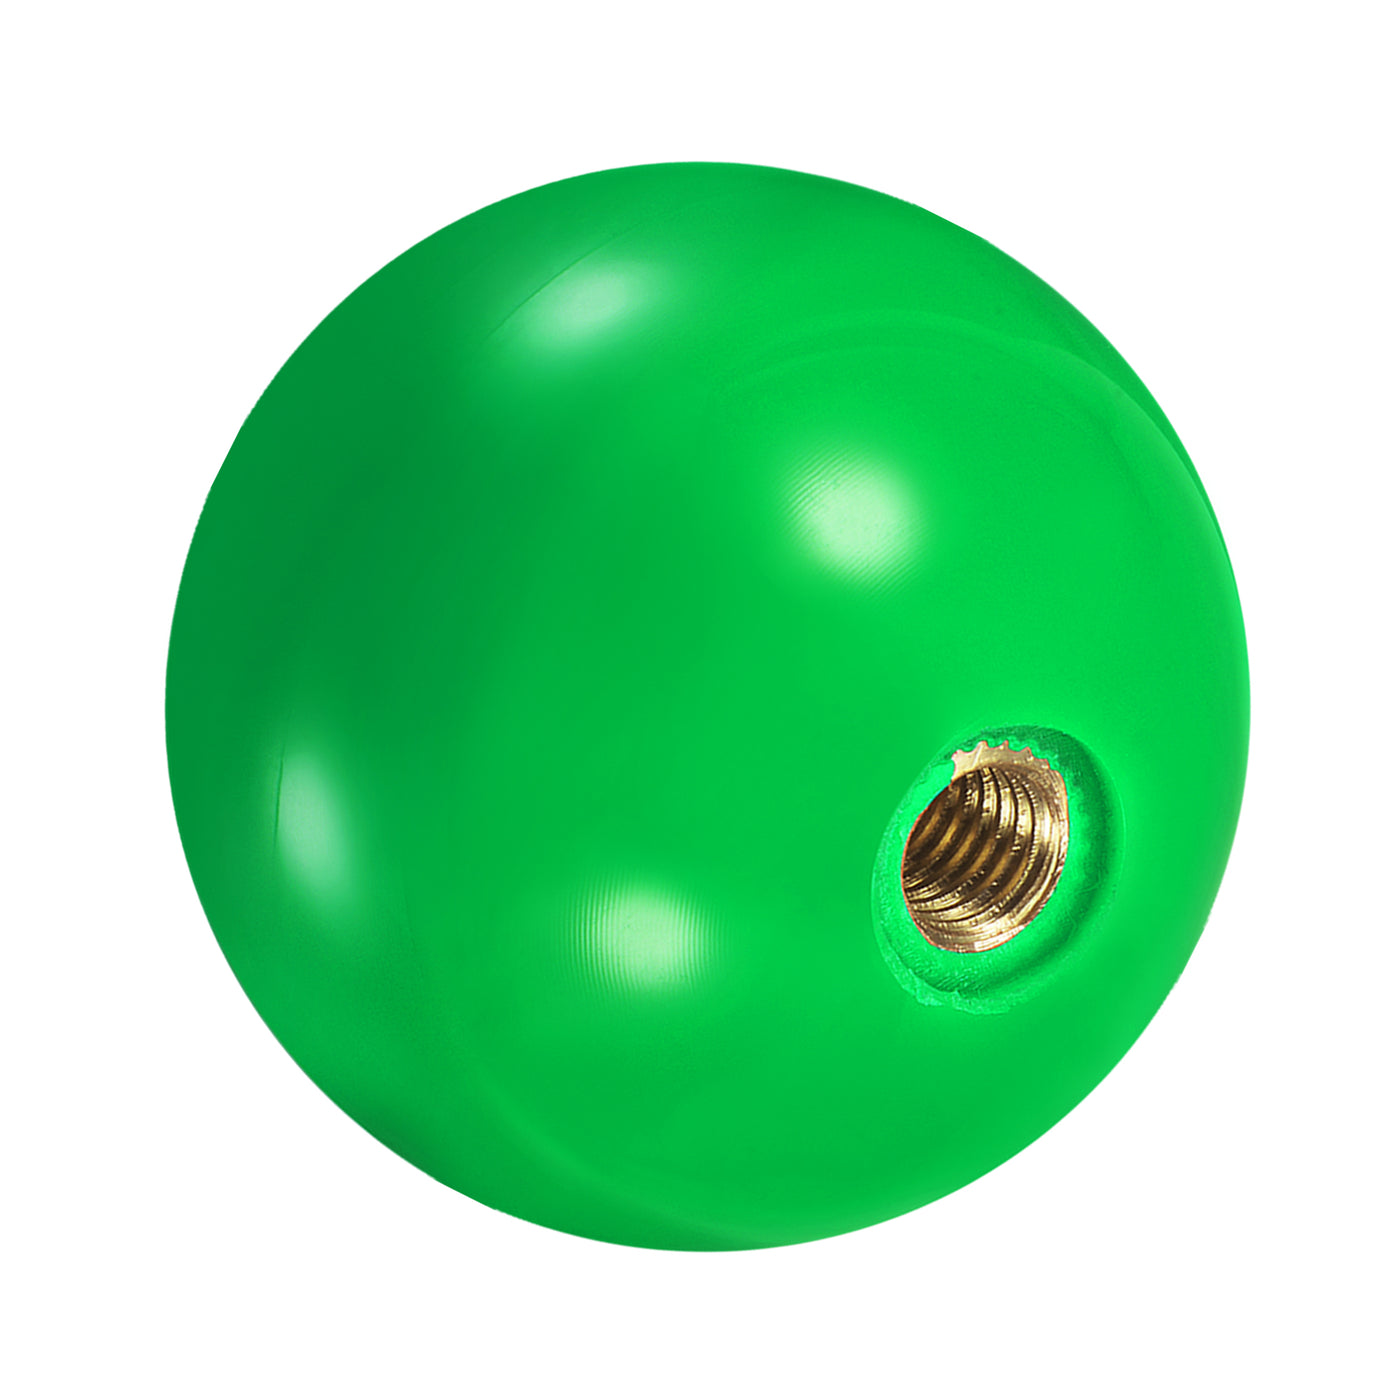 uxcell Uxcell Joystick Head Rocker Ball Top Handle Arcade Game Replacement Green/Pink